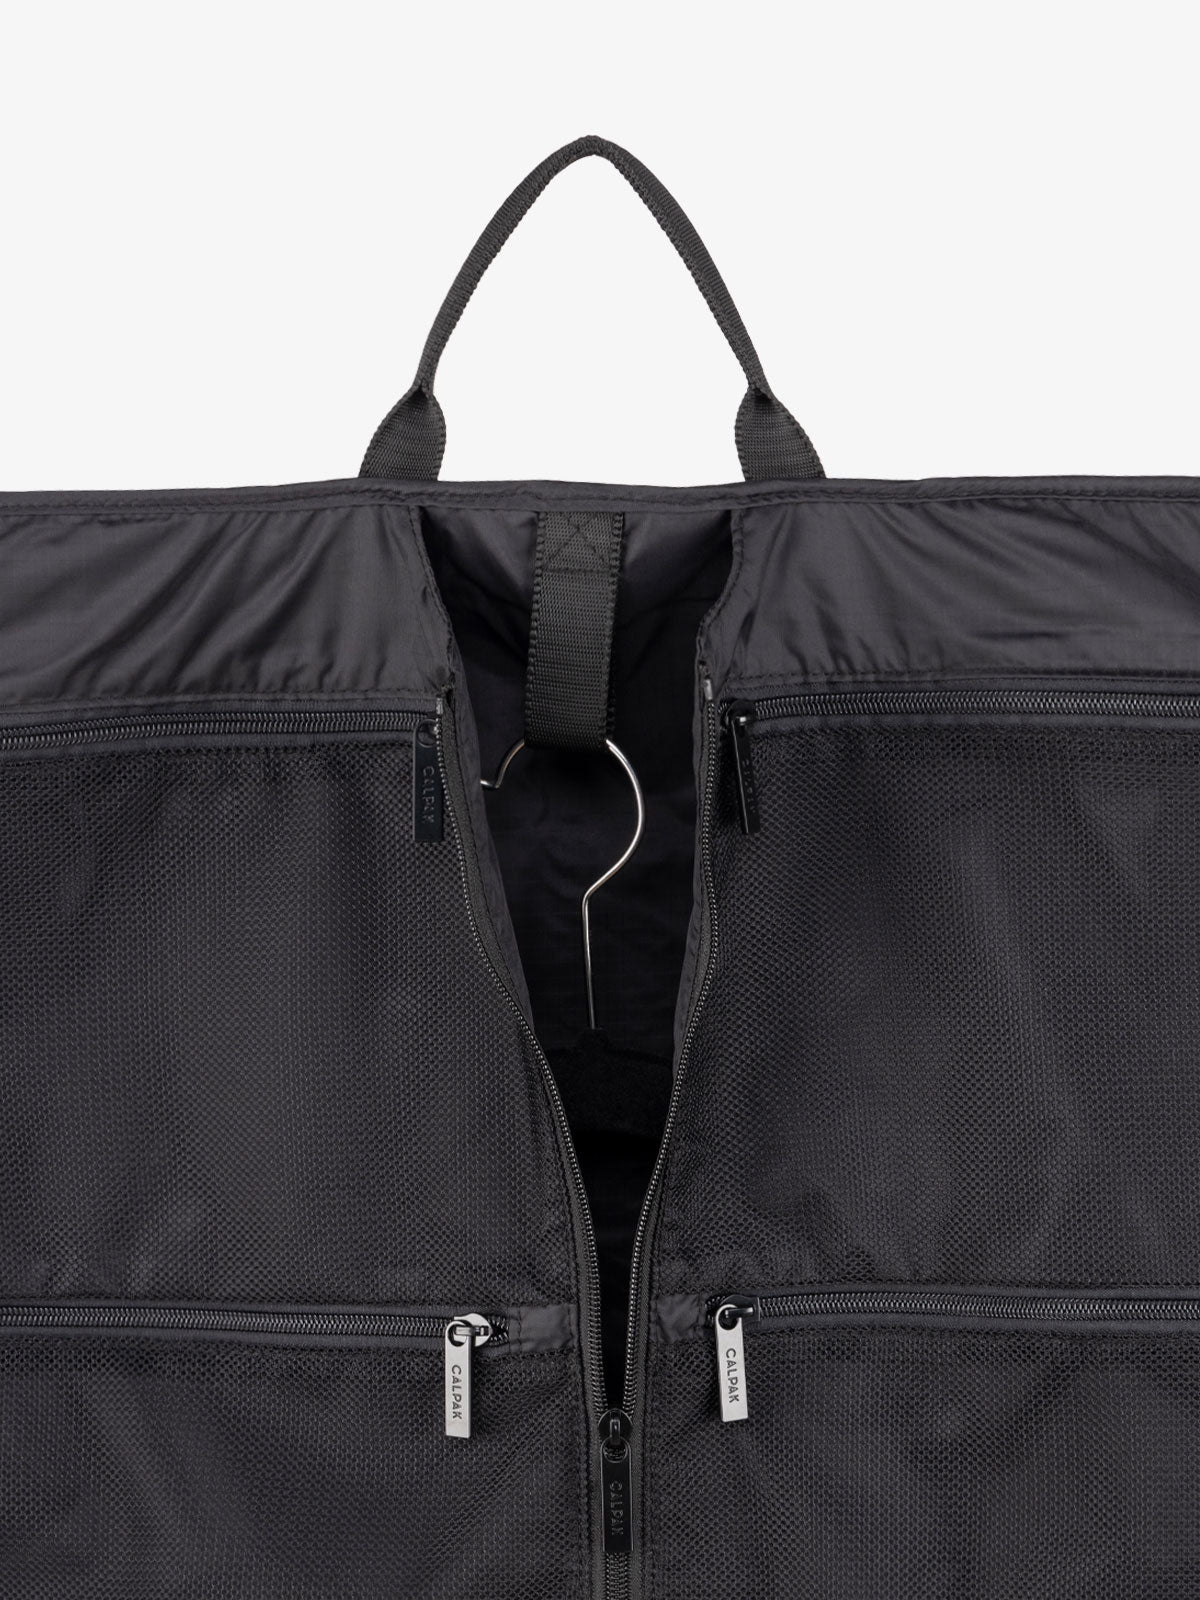 CALPAK garment bag with mesh pockets in black